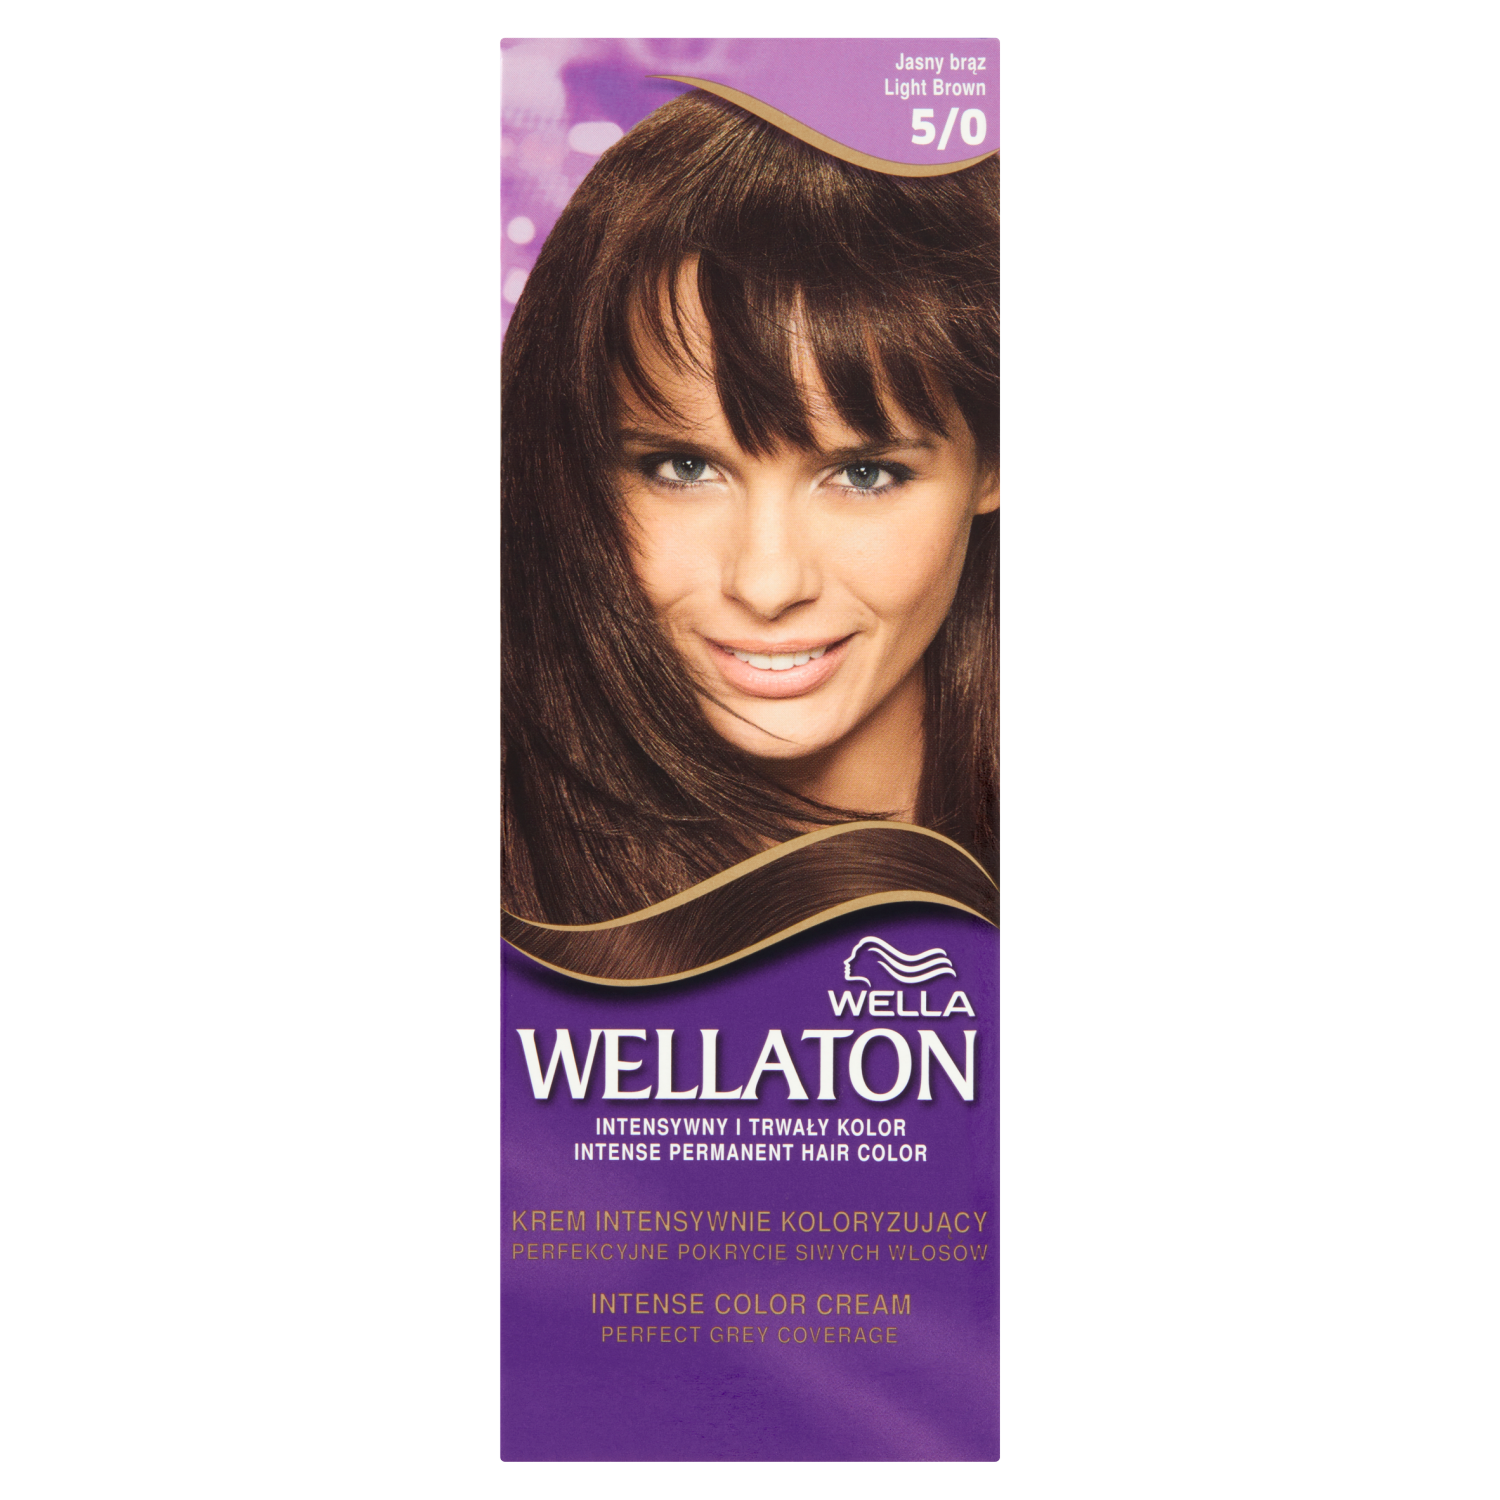 Wella Wellaton крем-краска для волос 5/0 русый, 1 упаковка цена и фото